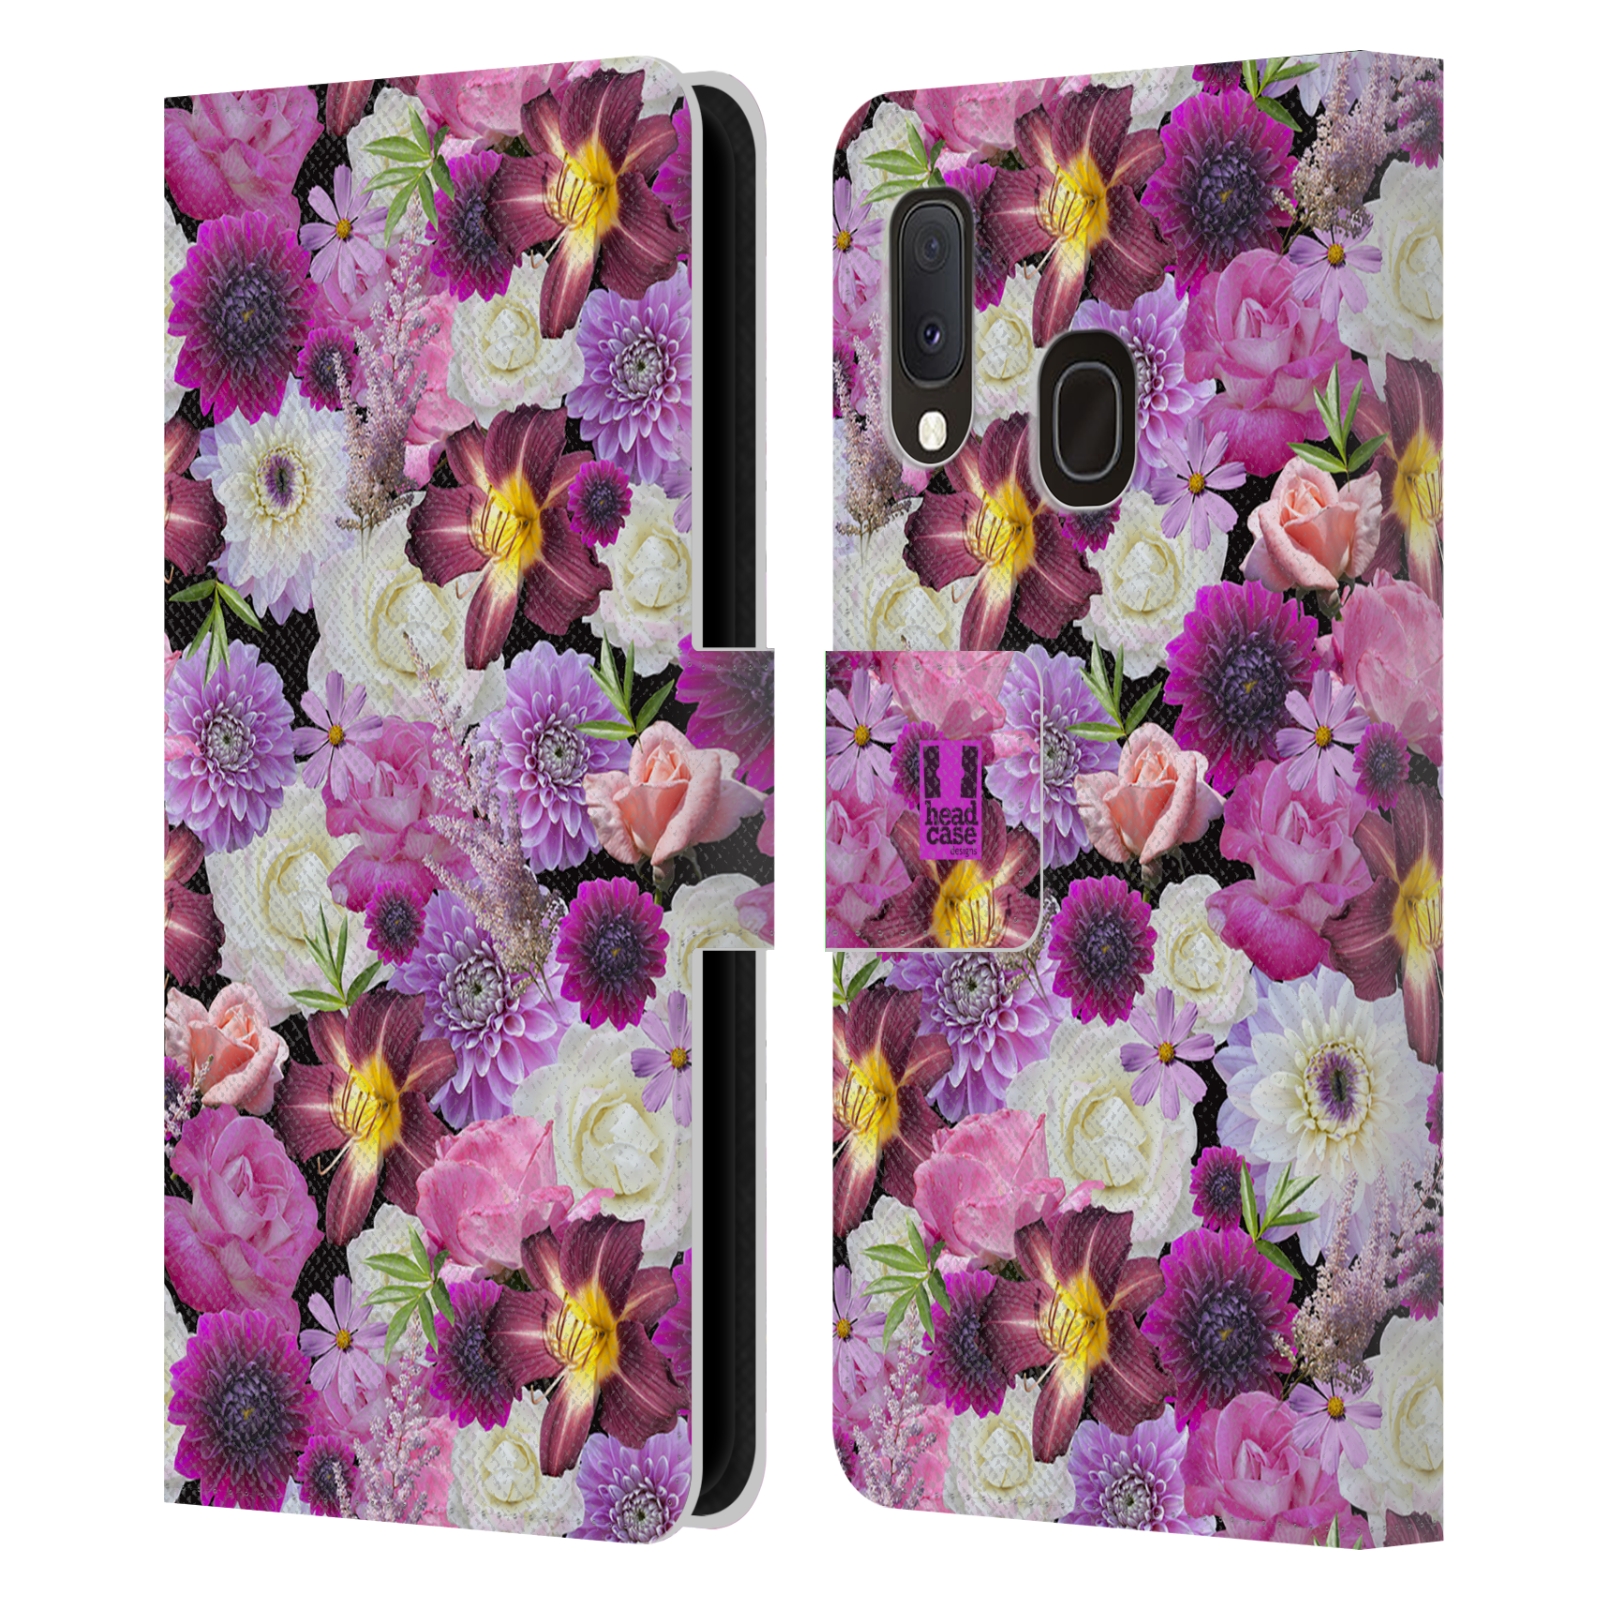 Pouzdro na mobil Samsung Galaxy A20e květy foto fialová a bílá